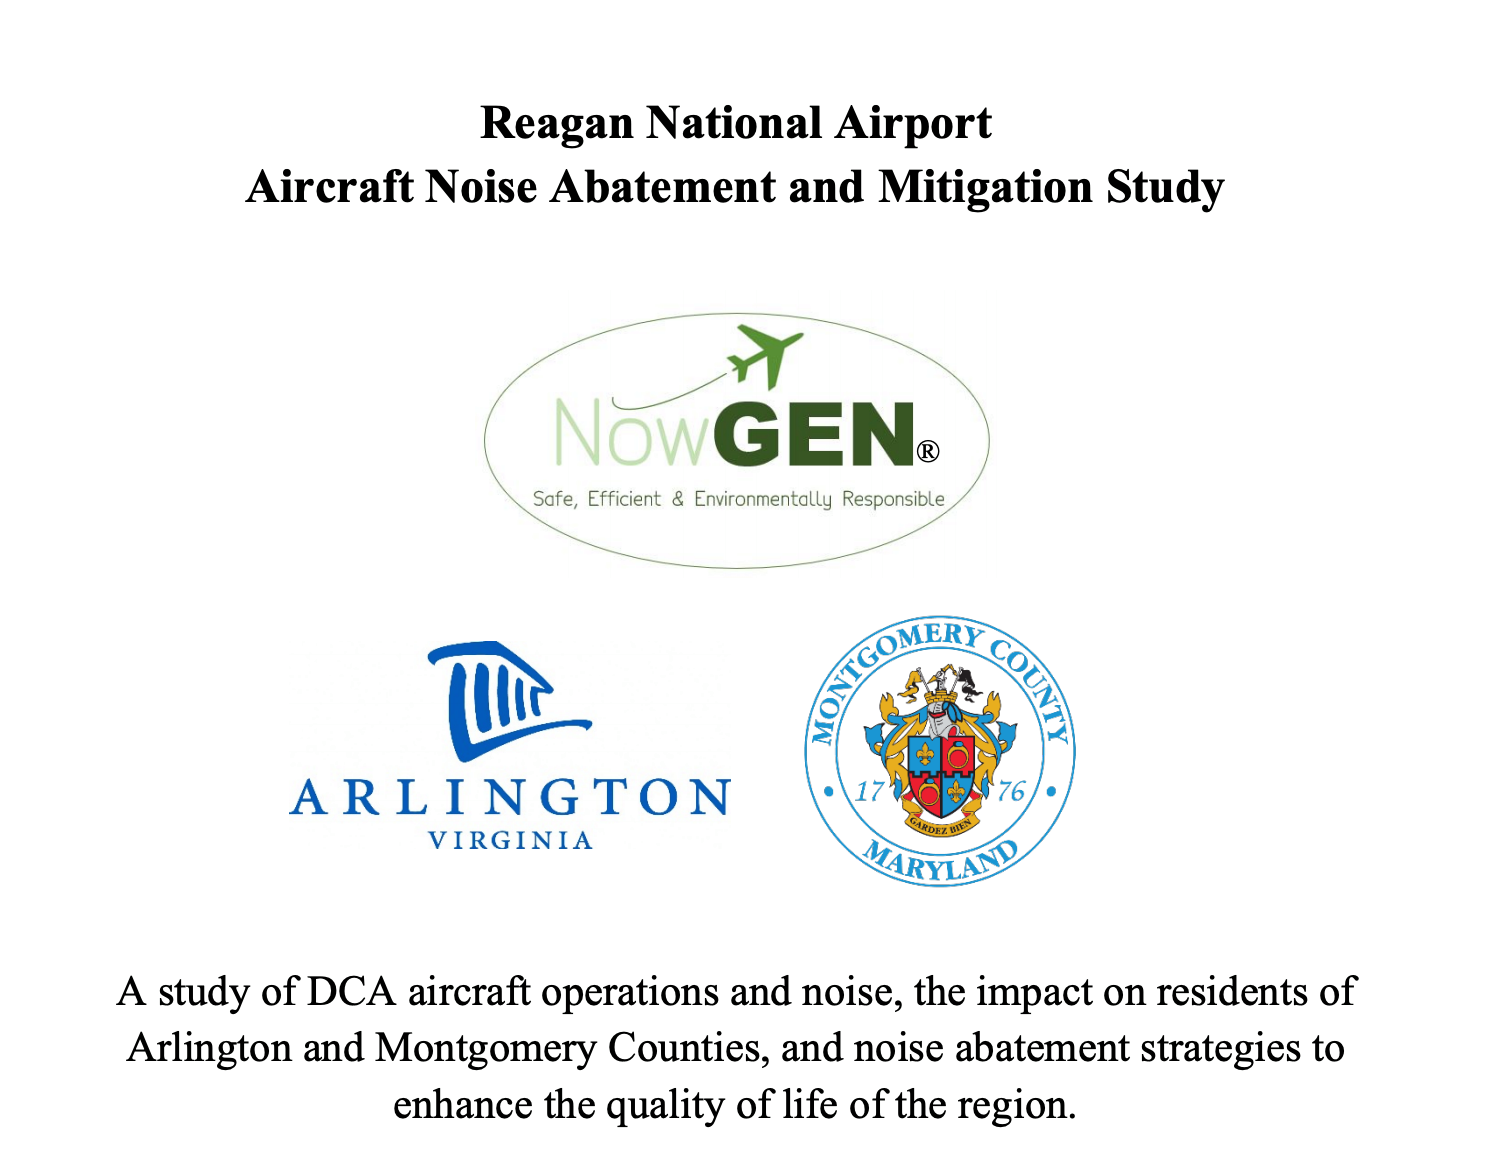 Reagan National Airport Aircraft Noise Abatement and Mitigation Study logo